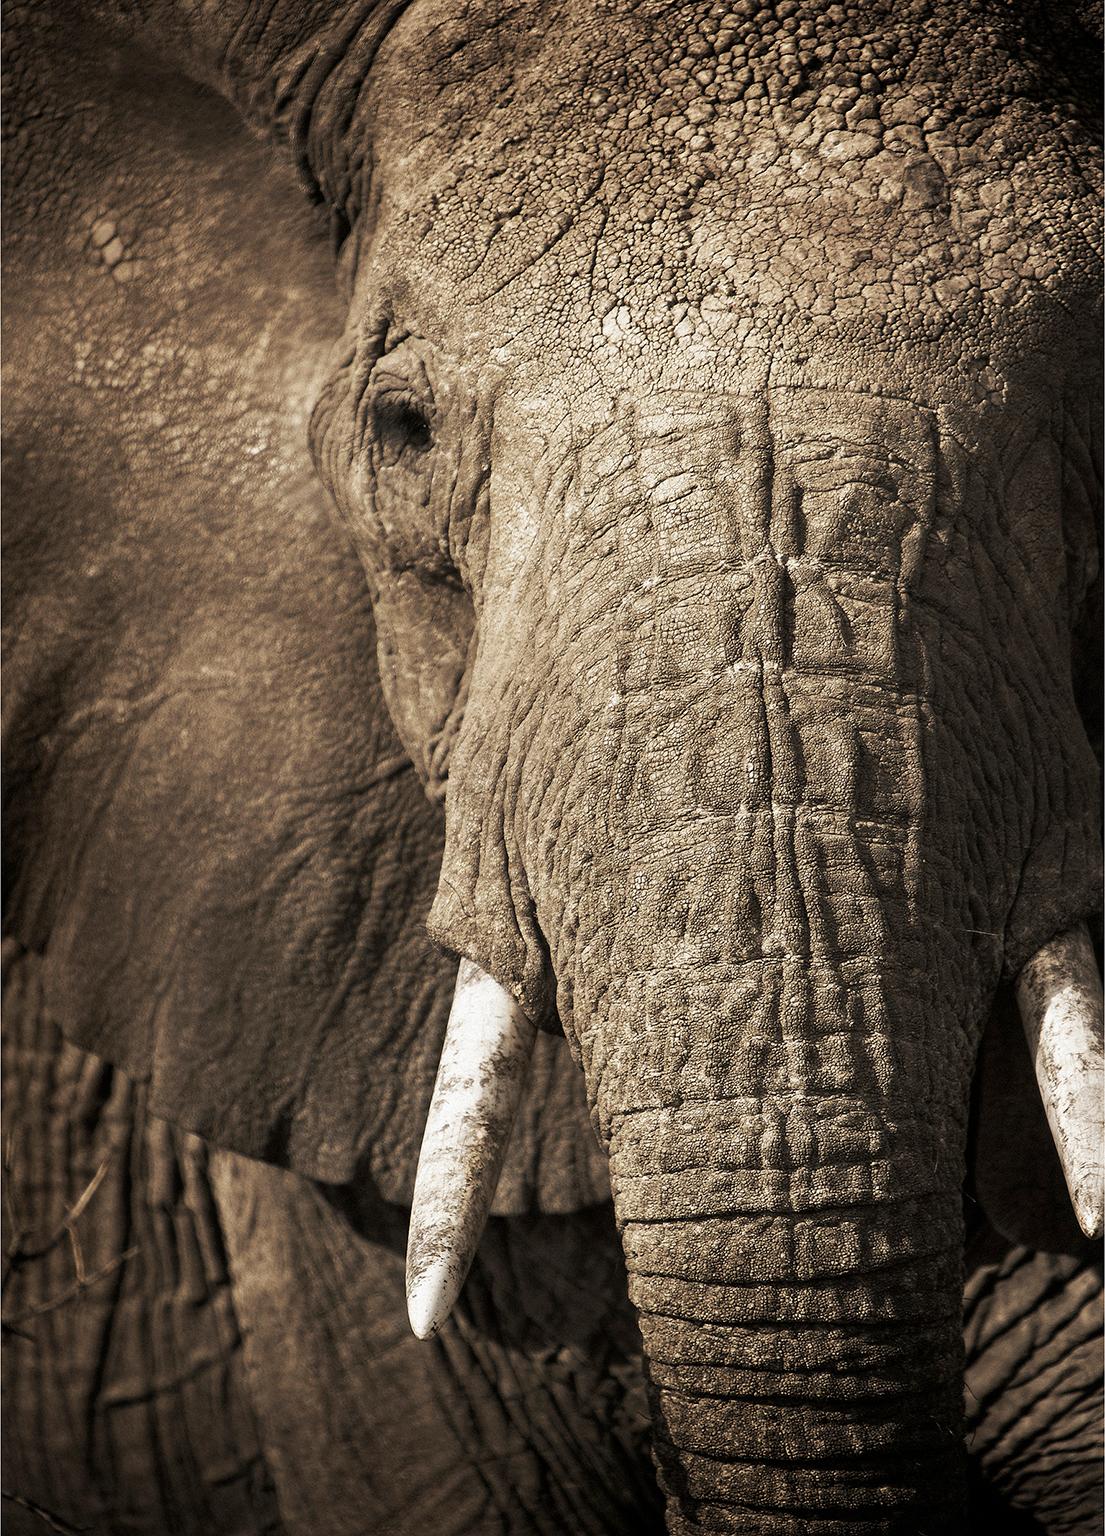 Elephant-04, Namibia. - Black Black and White Photograph by Chris Gordaneer